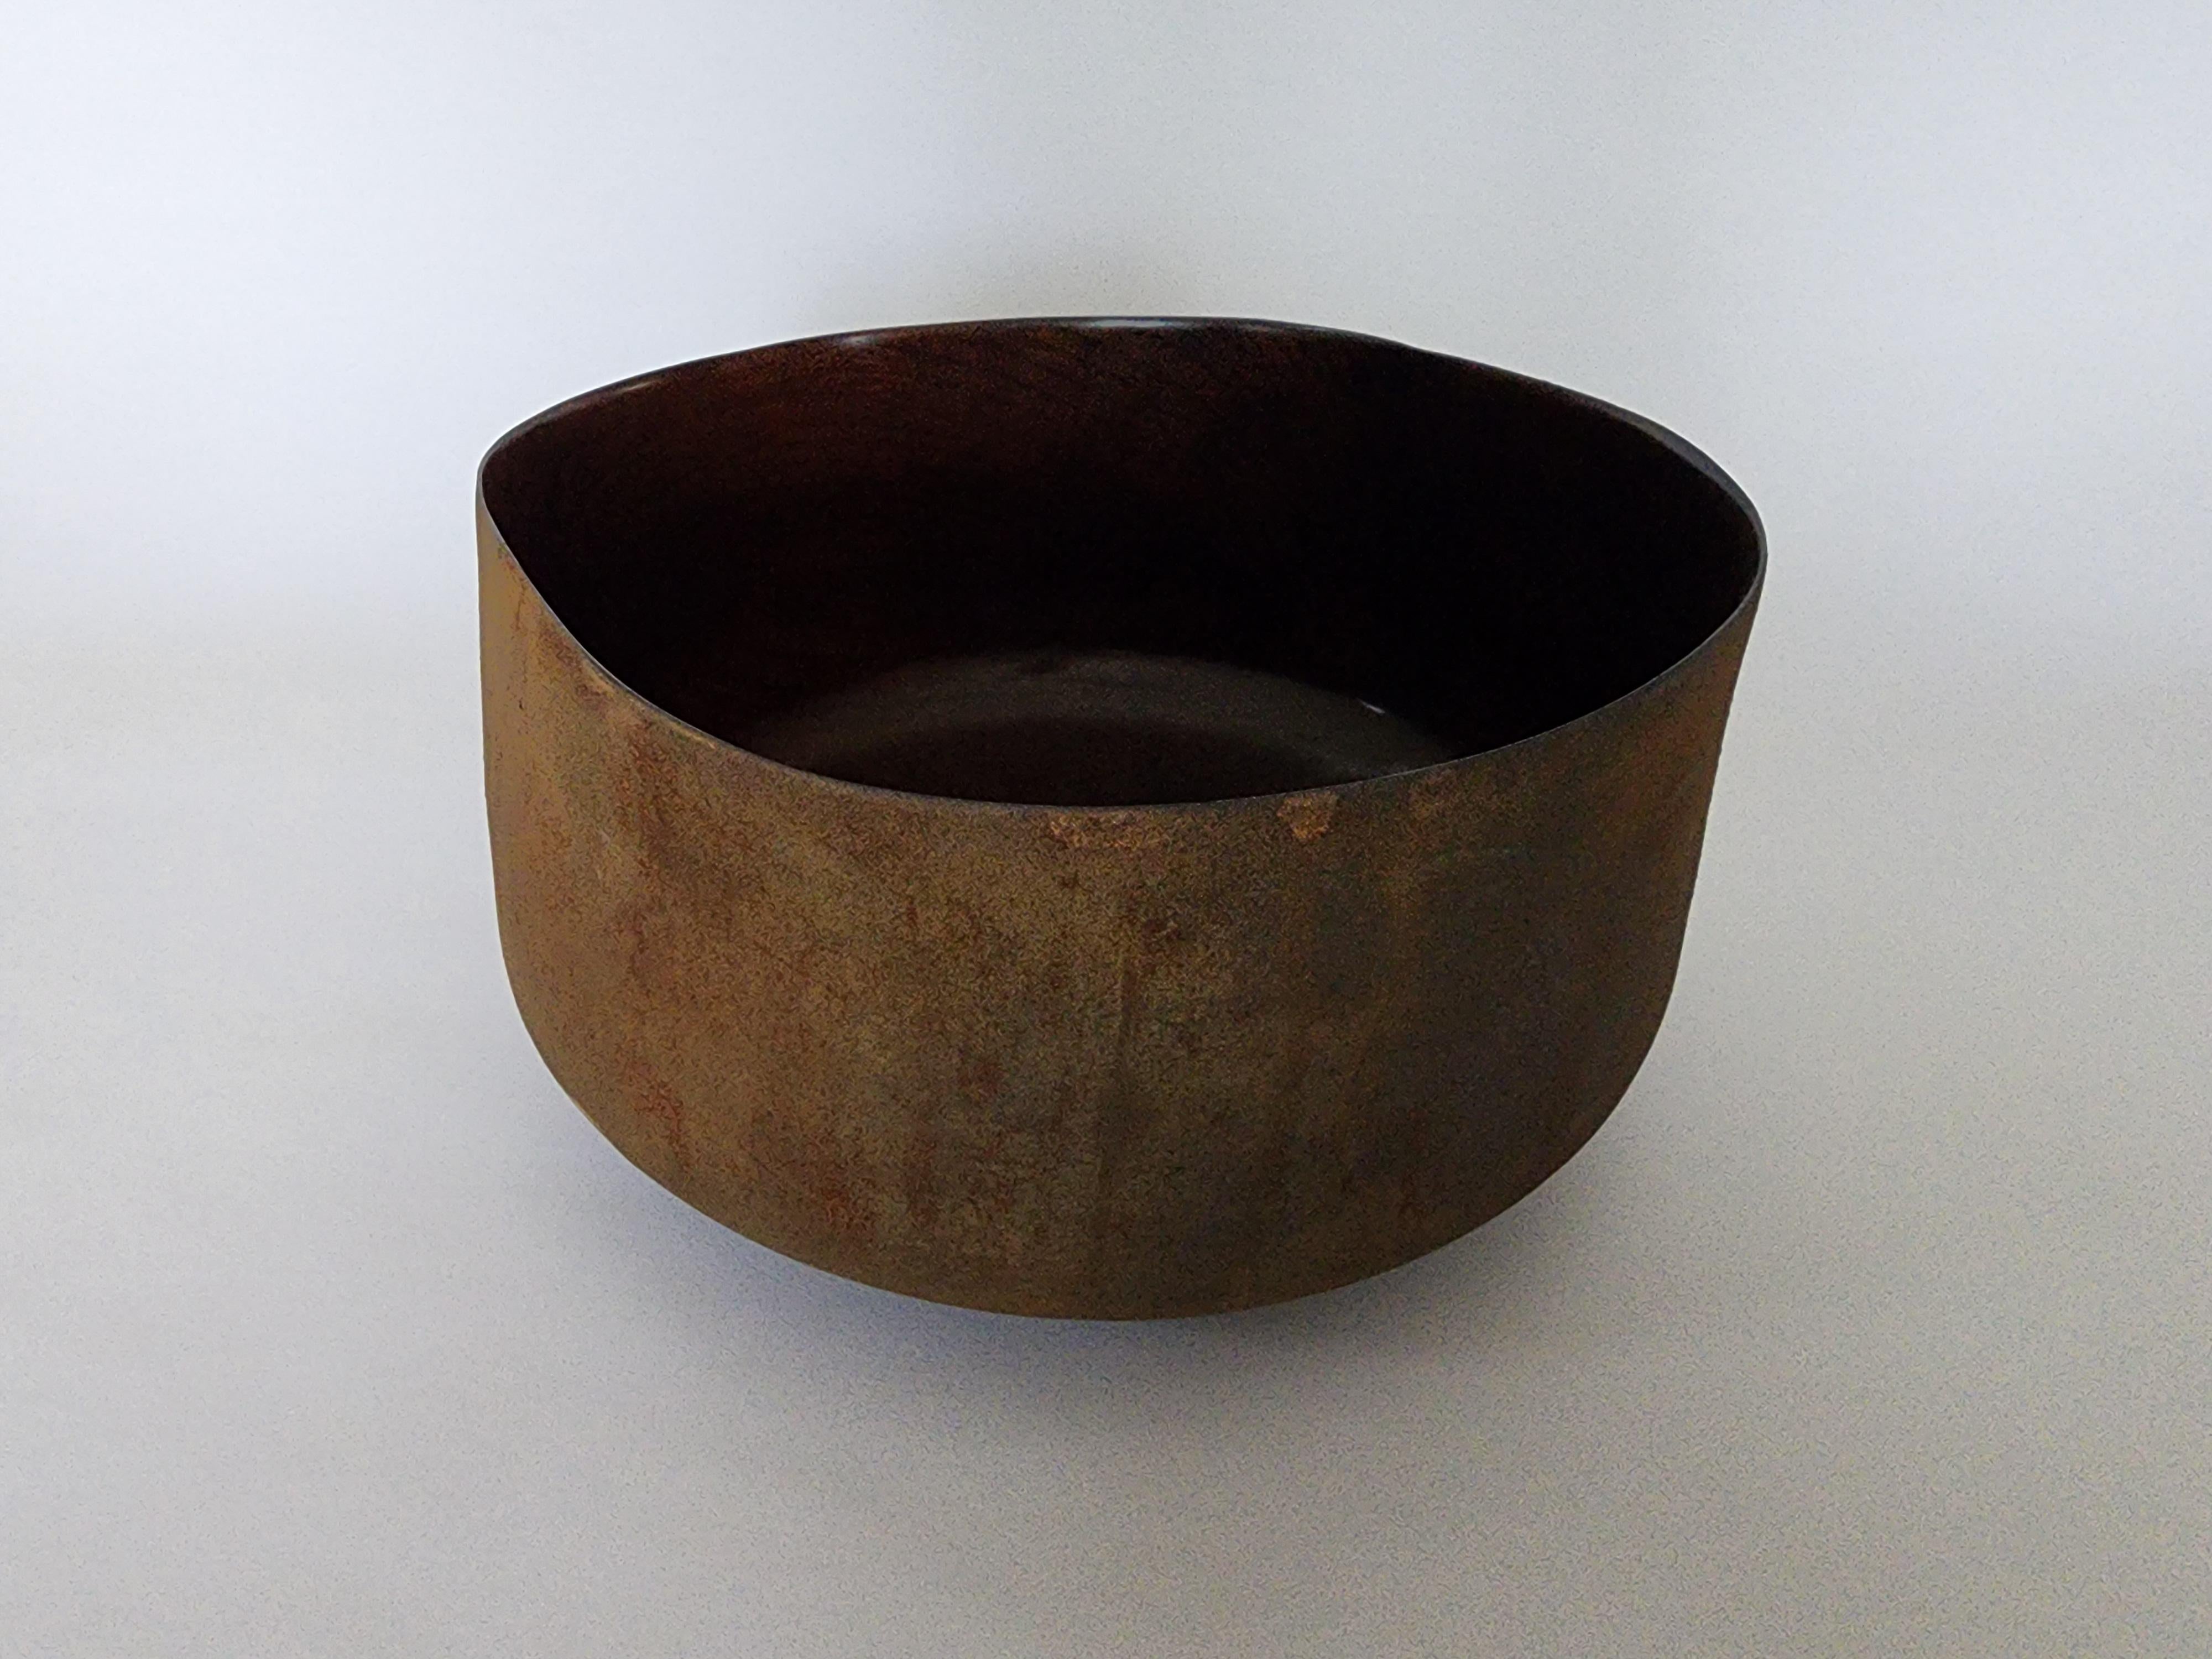 Asian Contemporary The Earth's Language 03 bowl by Sukkeun Kang For Sale